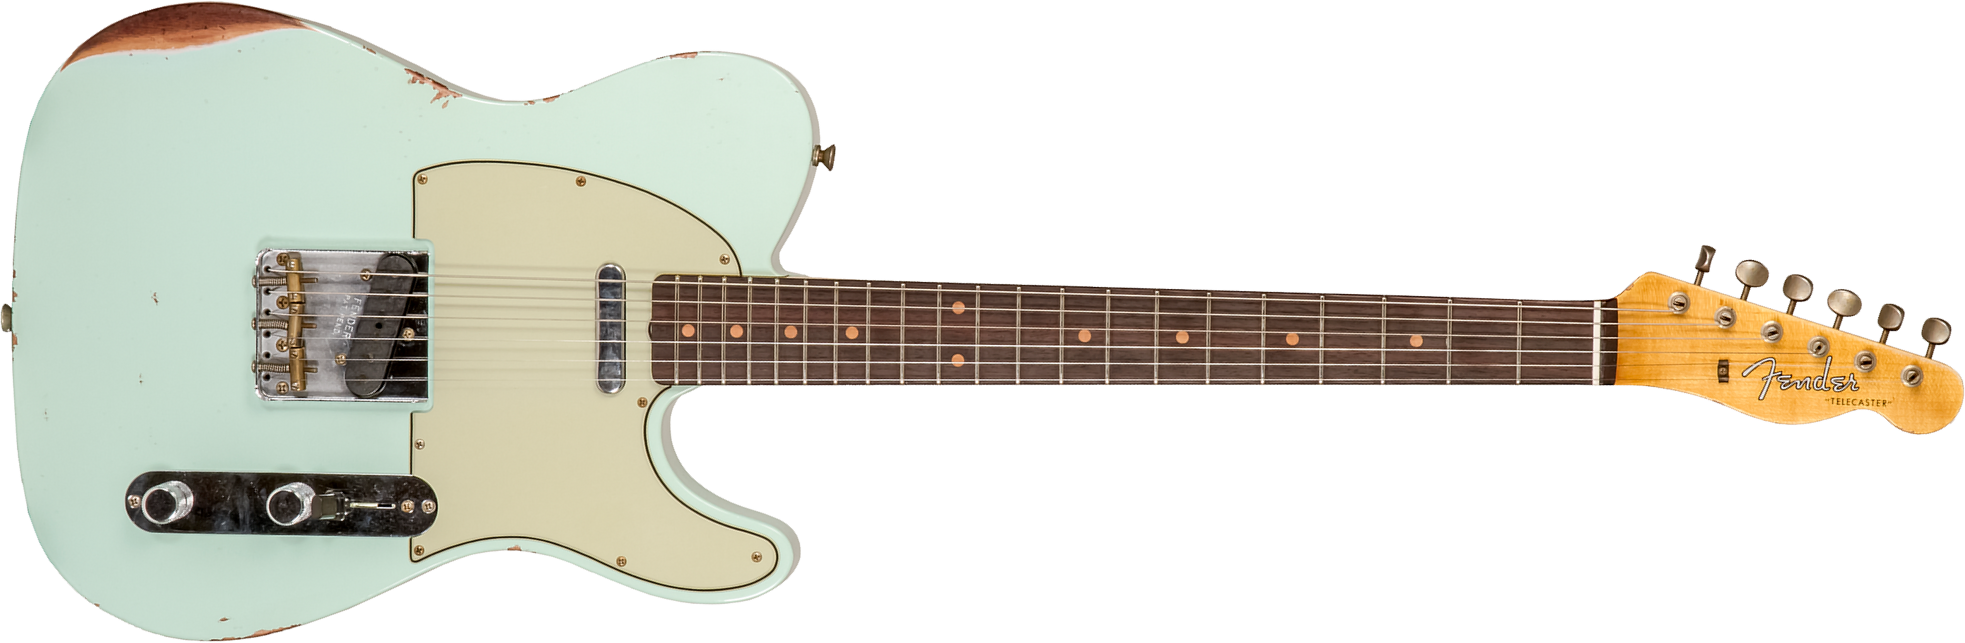 Fender Custom Shop Tele 1961 2s Ht Rw #cz576010 - Relic Aged Surf Green - E-Gitarre in Teleform - Main picture